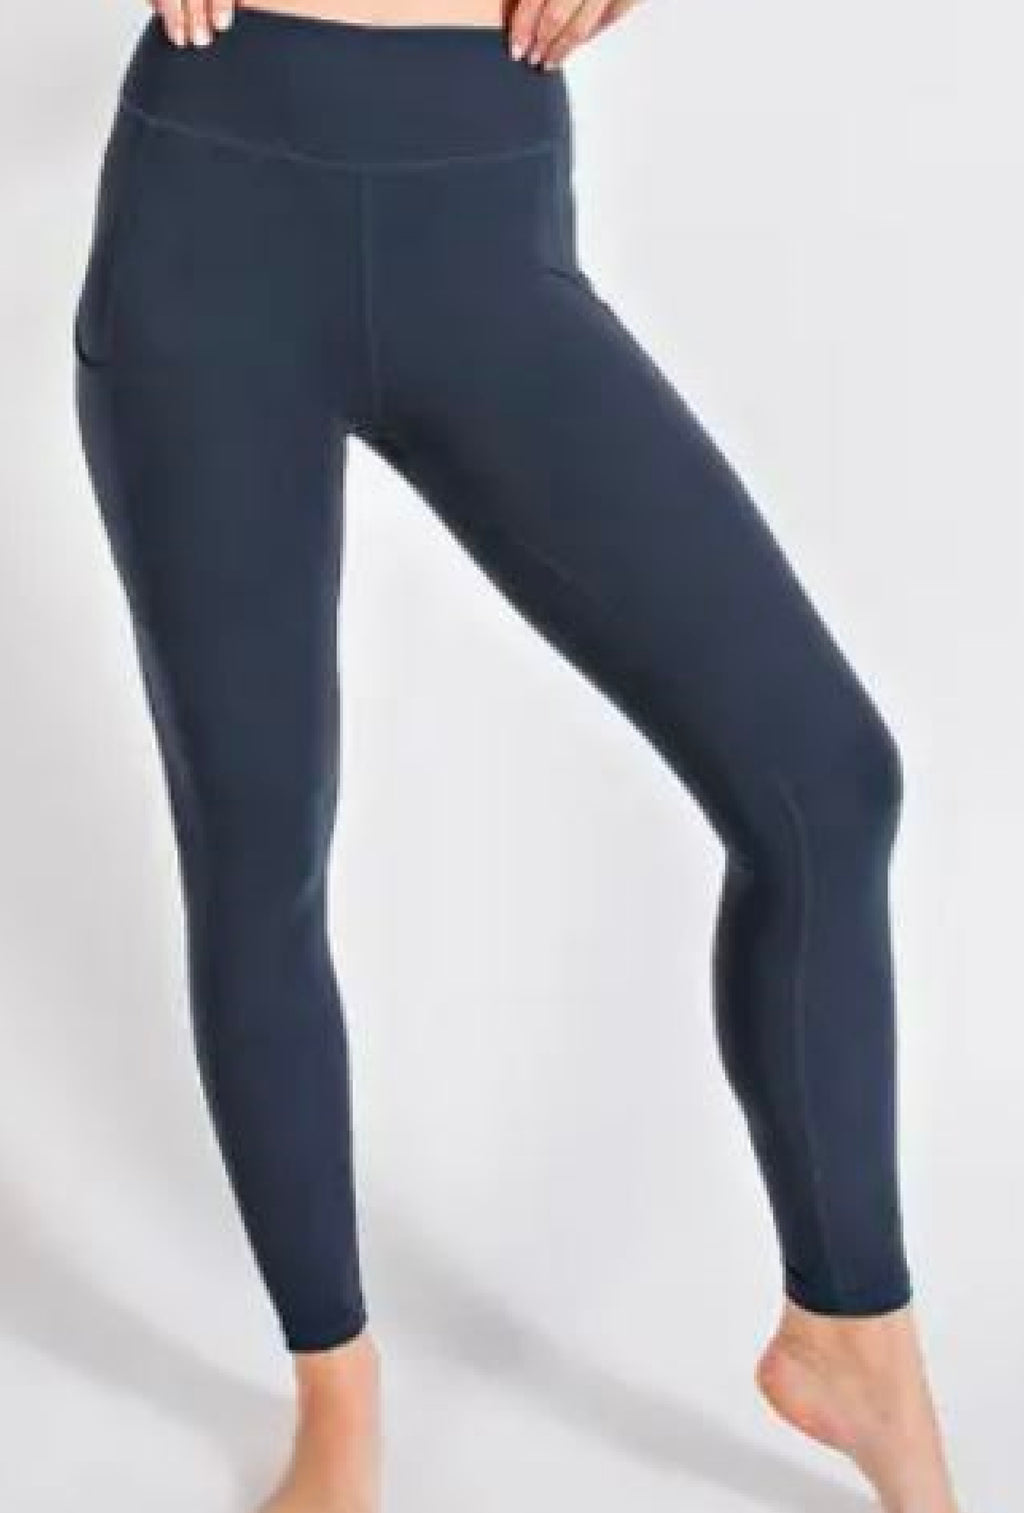 Ms Ivy - Butter soft basic full length leggings with pocket - Black –  Mckenzie Brown Boutique